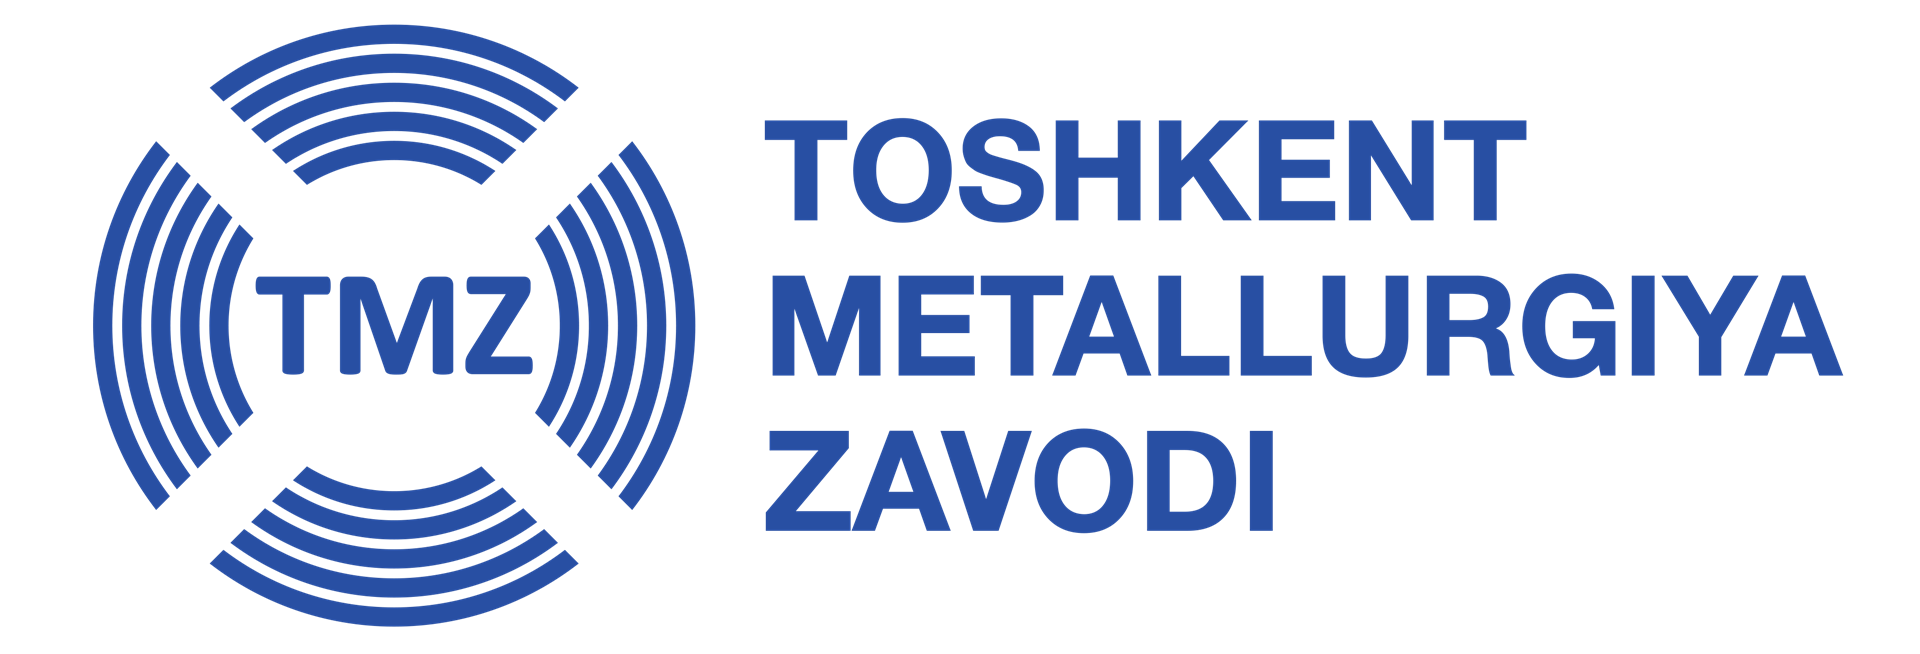 Toshkent Metallurgiya Zavodi (TMZ) increases production capacity 